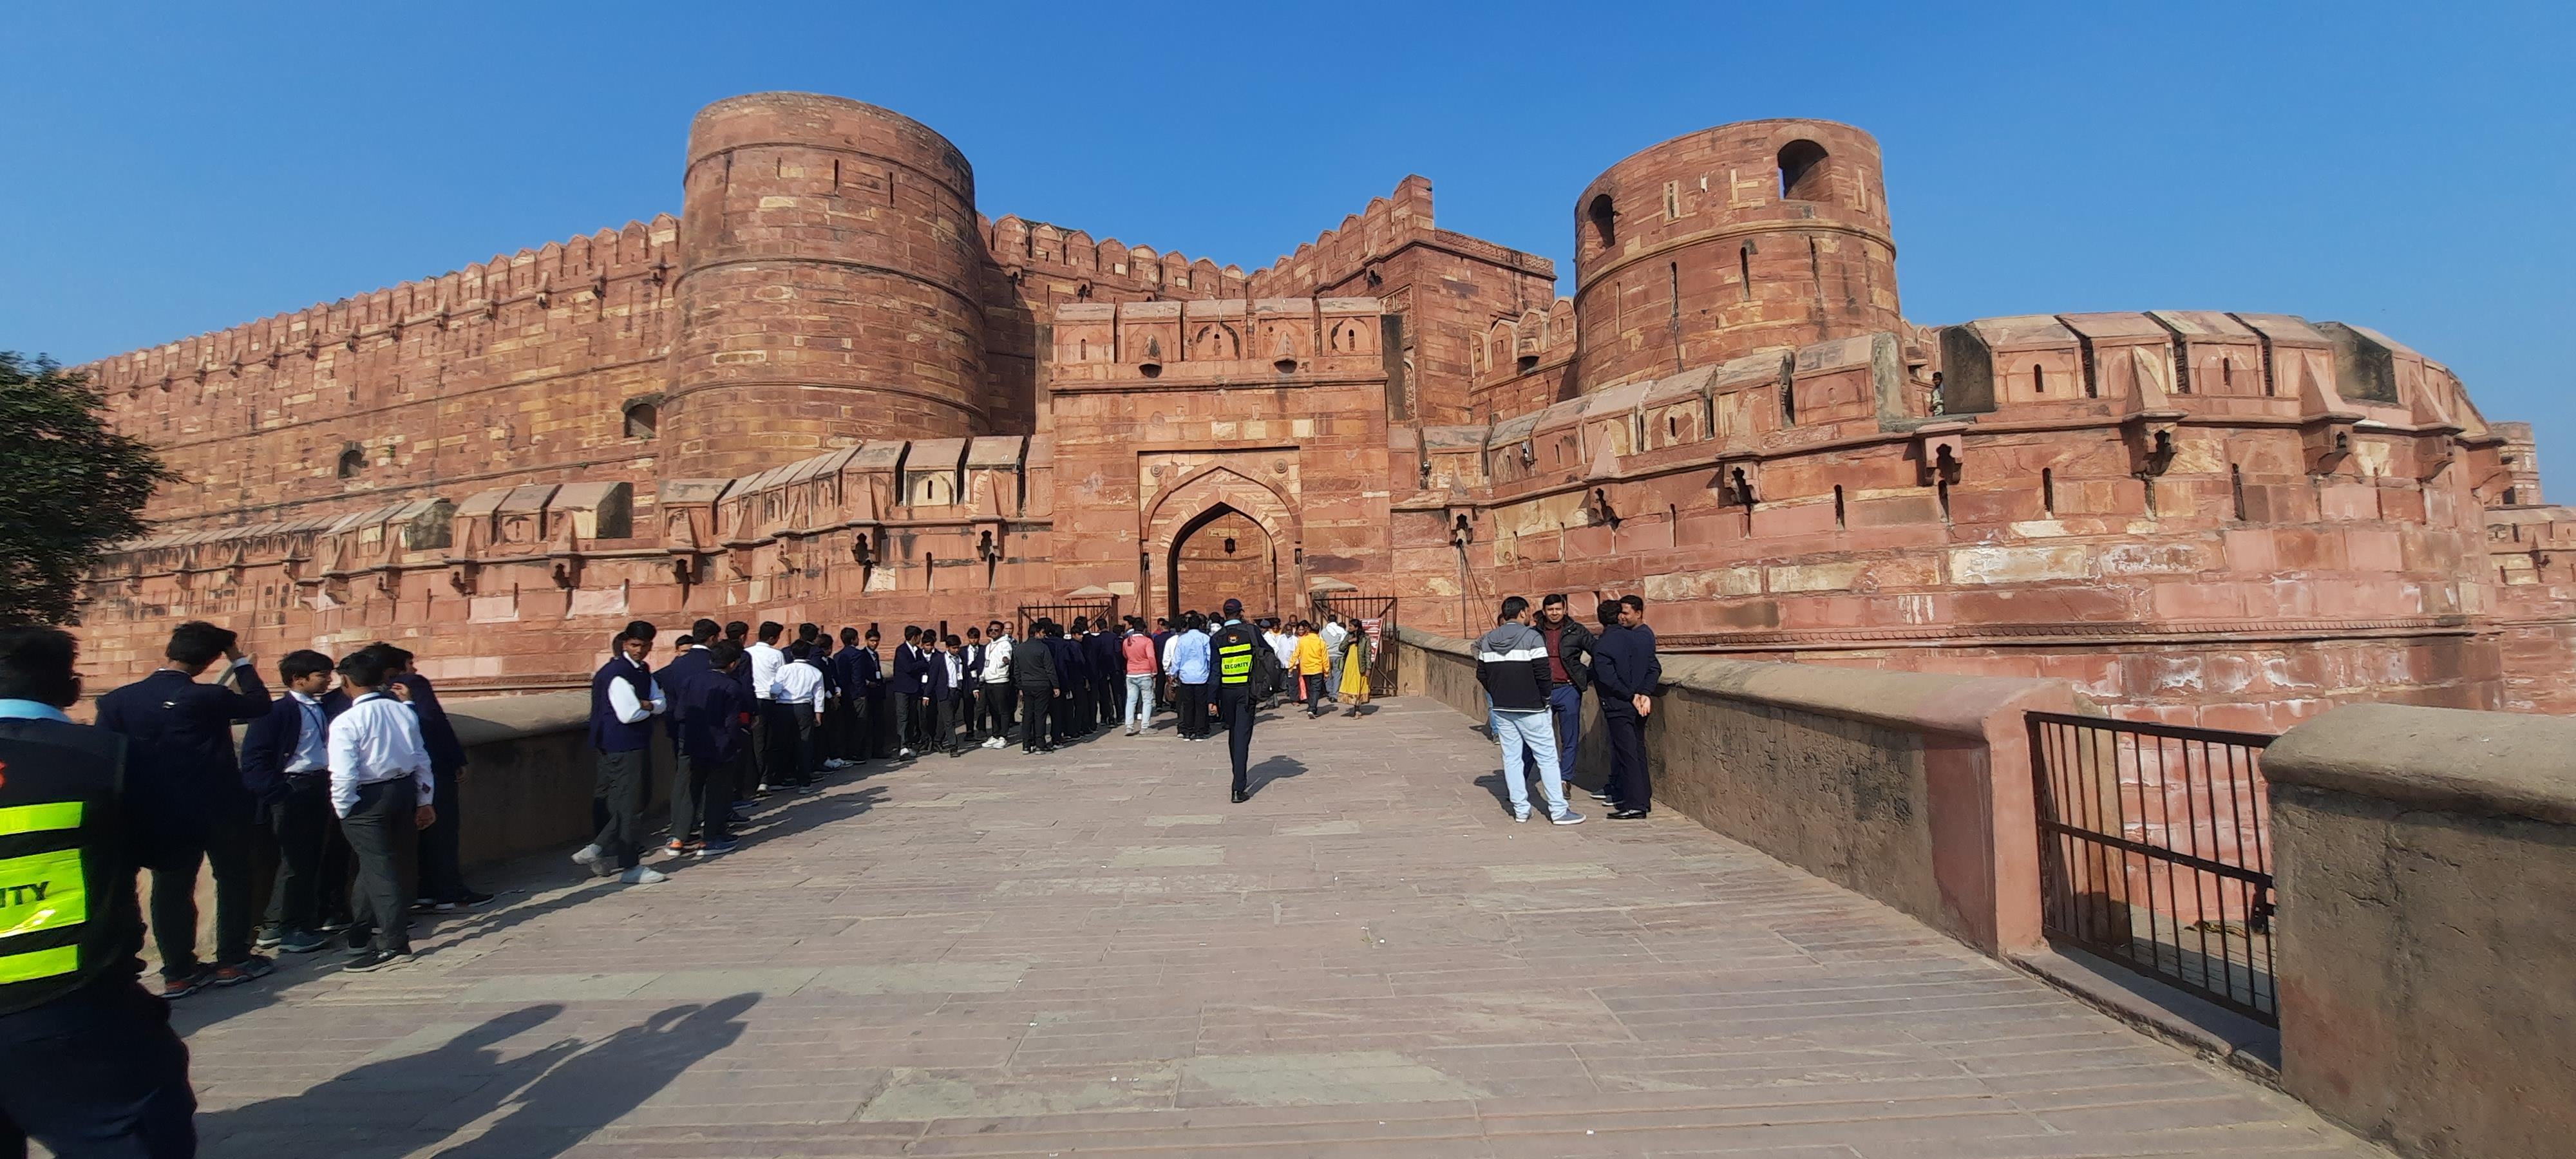 Taj-Mahal-&-Agra-Tour-by-Private-Car-from-Delhi-1